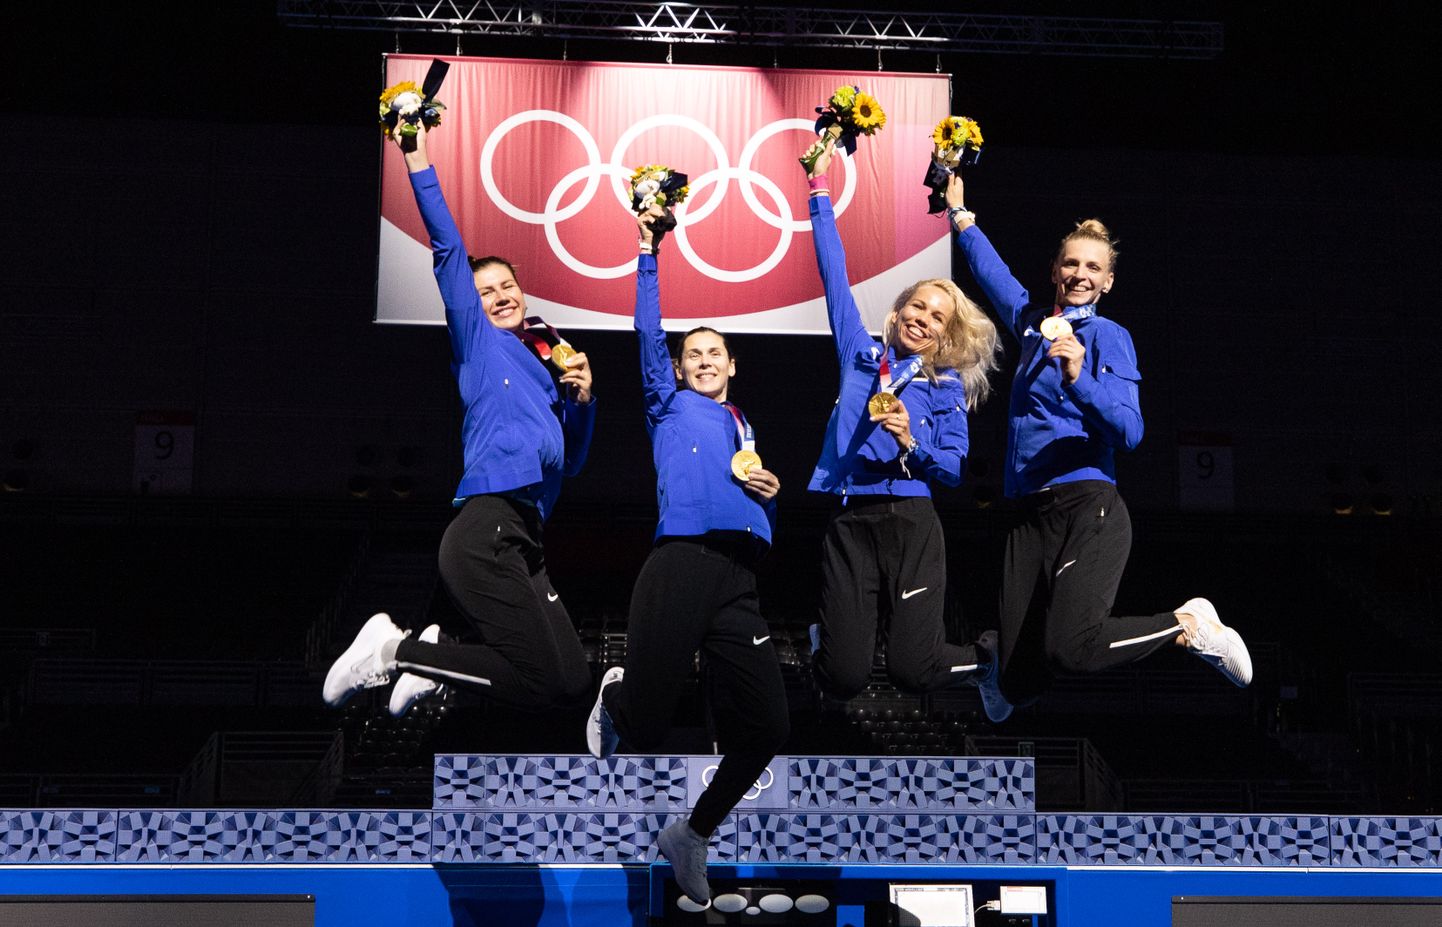 Завоевавшие олимпийское золото эстонские шпажистки Юлия Беляева, Ирина Эмбрих, Эрика Кирпу и Катрина Лехис.